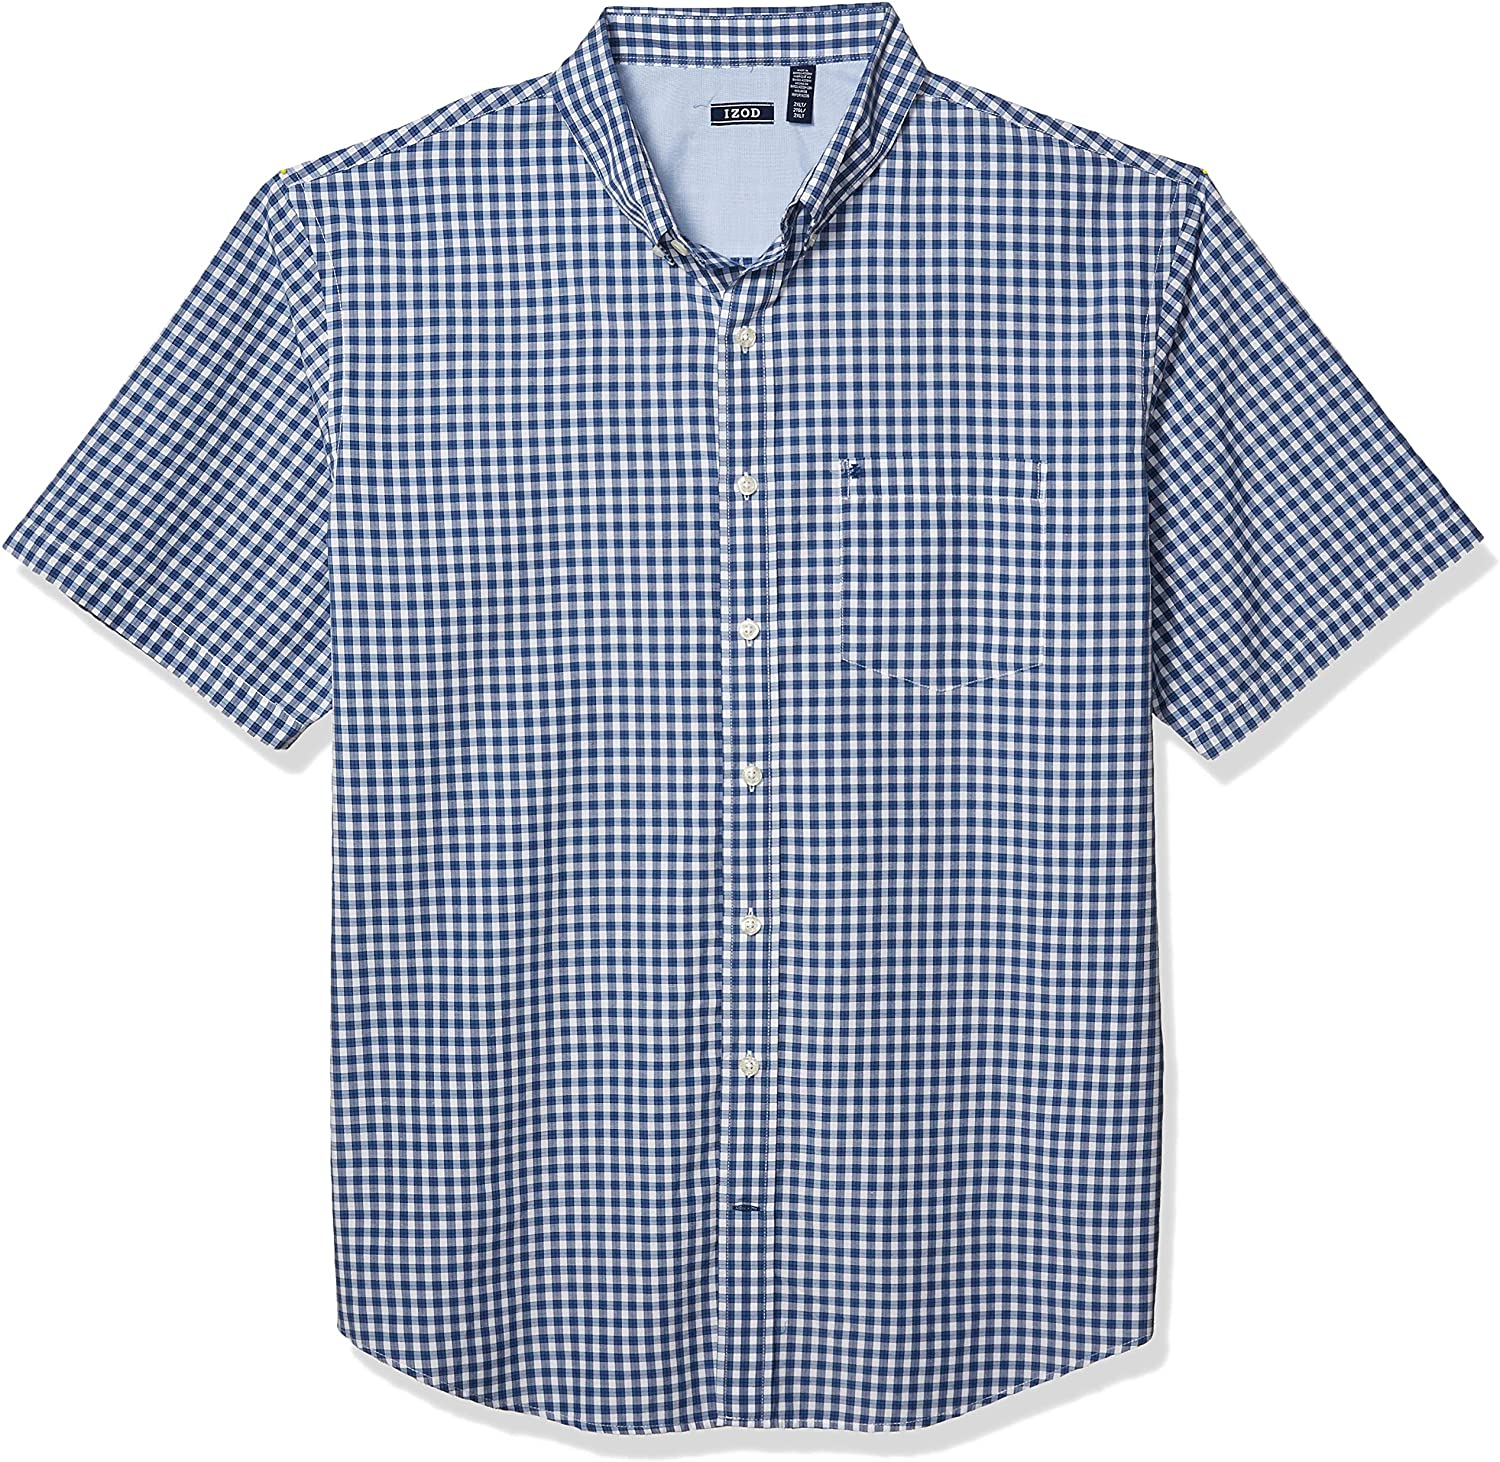 New IZOD Men's Big &Tall Outpost Short Sleeve Button Down Americana Shirt 2XL 